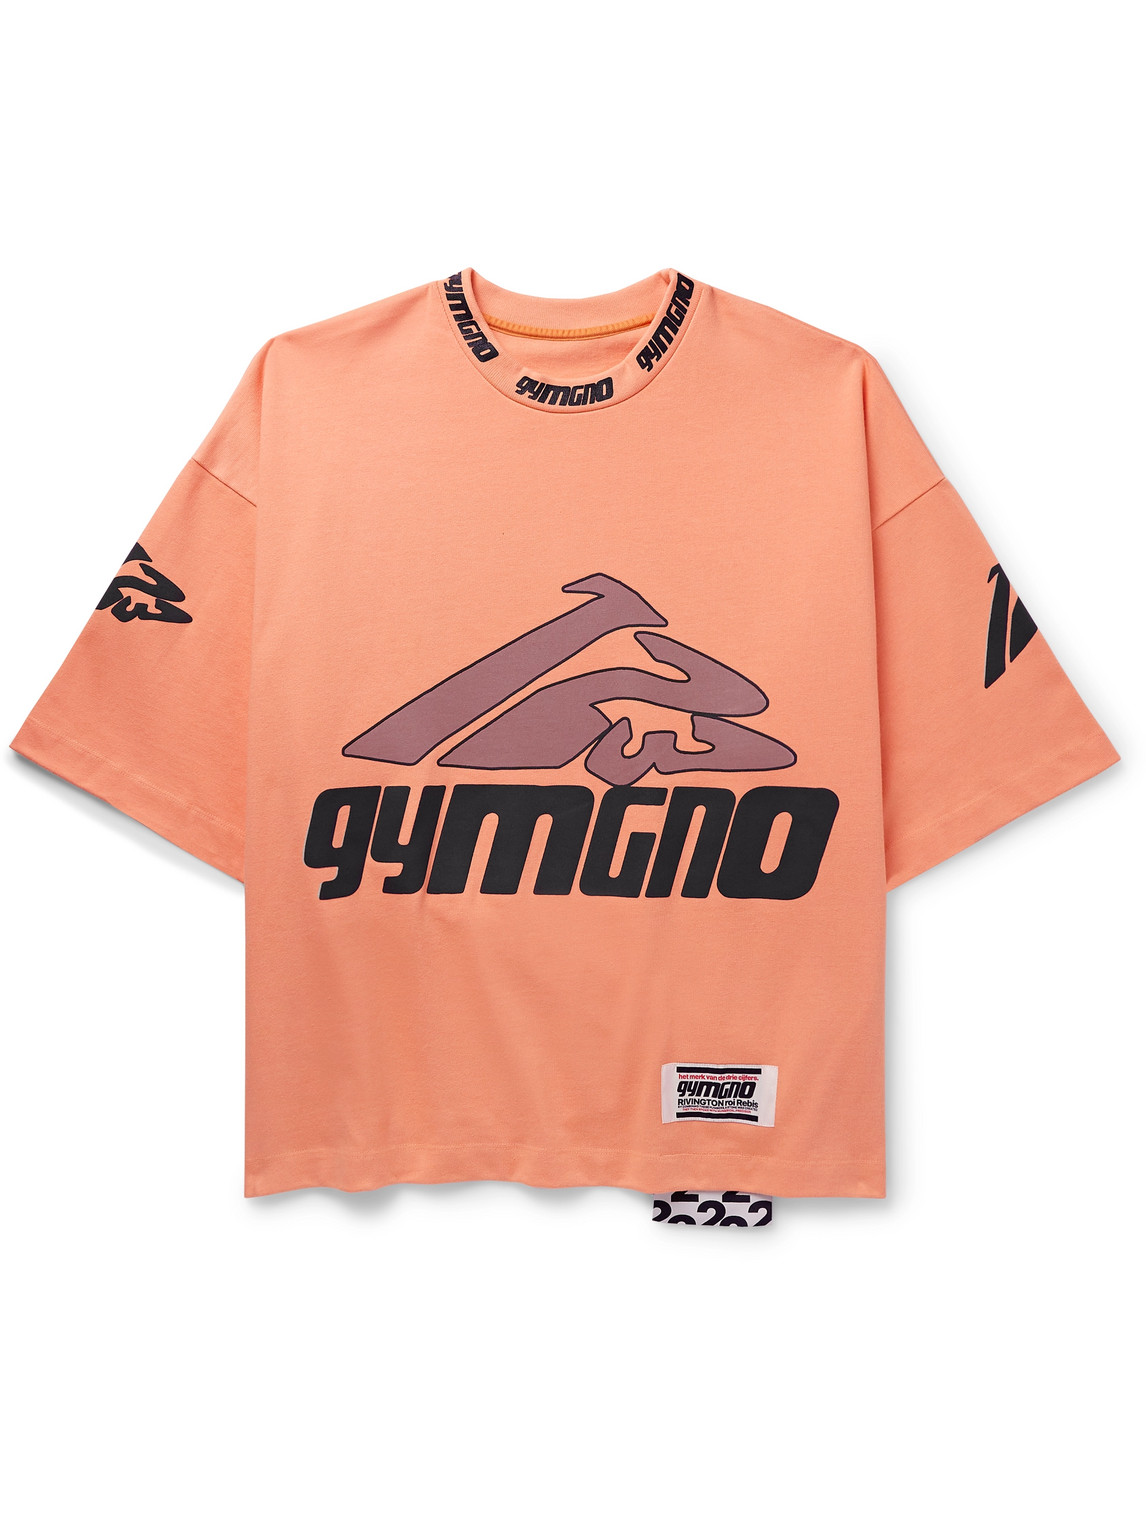 Rrr123 Fasting For Faster Printed Appliquéd Cotton-jersey T-shirt In Orange